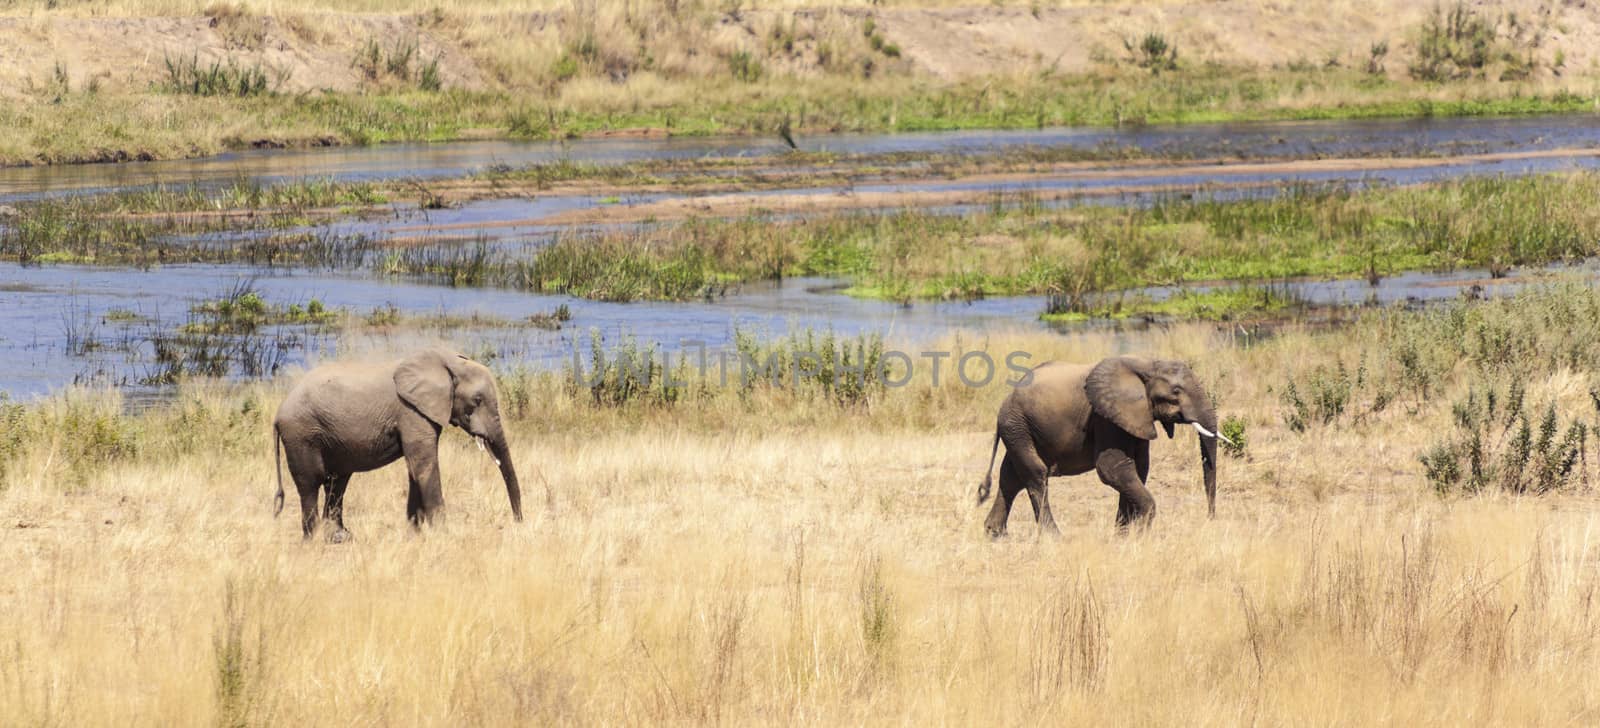 Walking Elephants by Imagecom